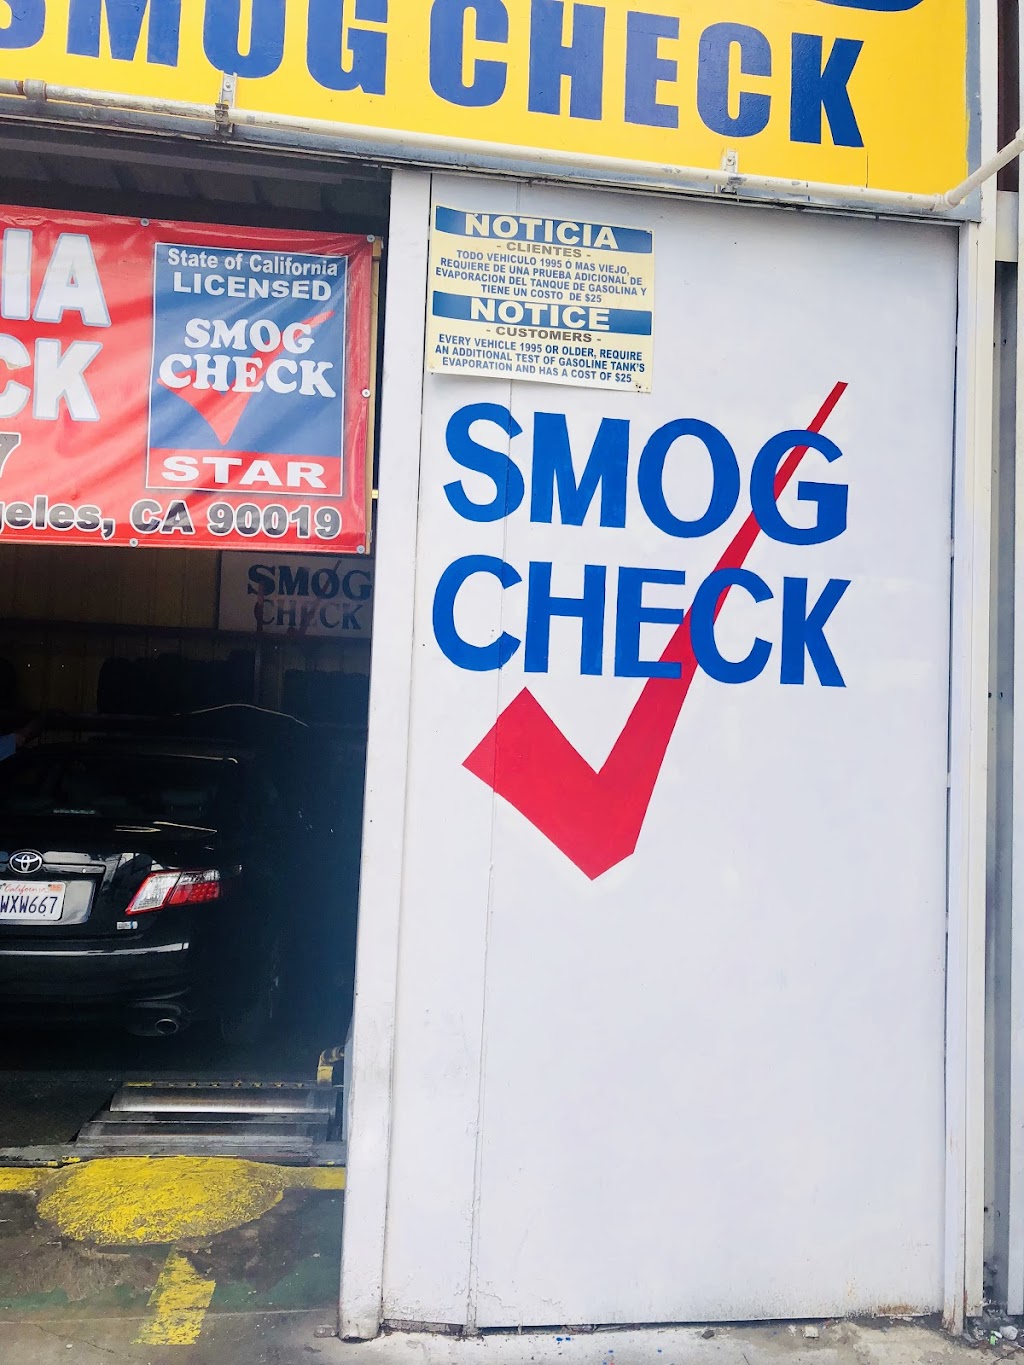 California Test Only Smog Check | 4169 Venice Blvd., Los Angeles, CA 90019, USA | Phone: (323) 737-3077